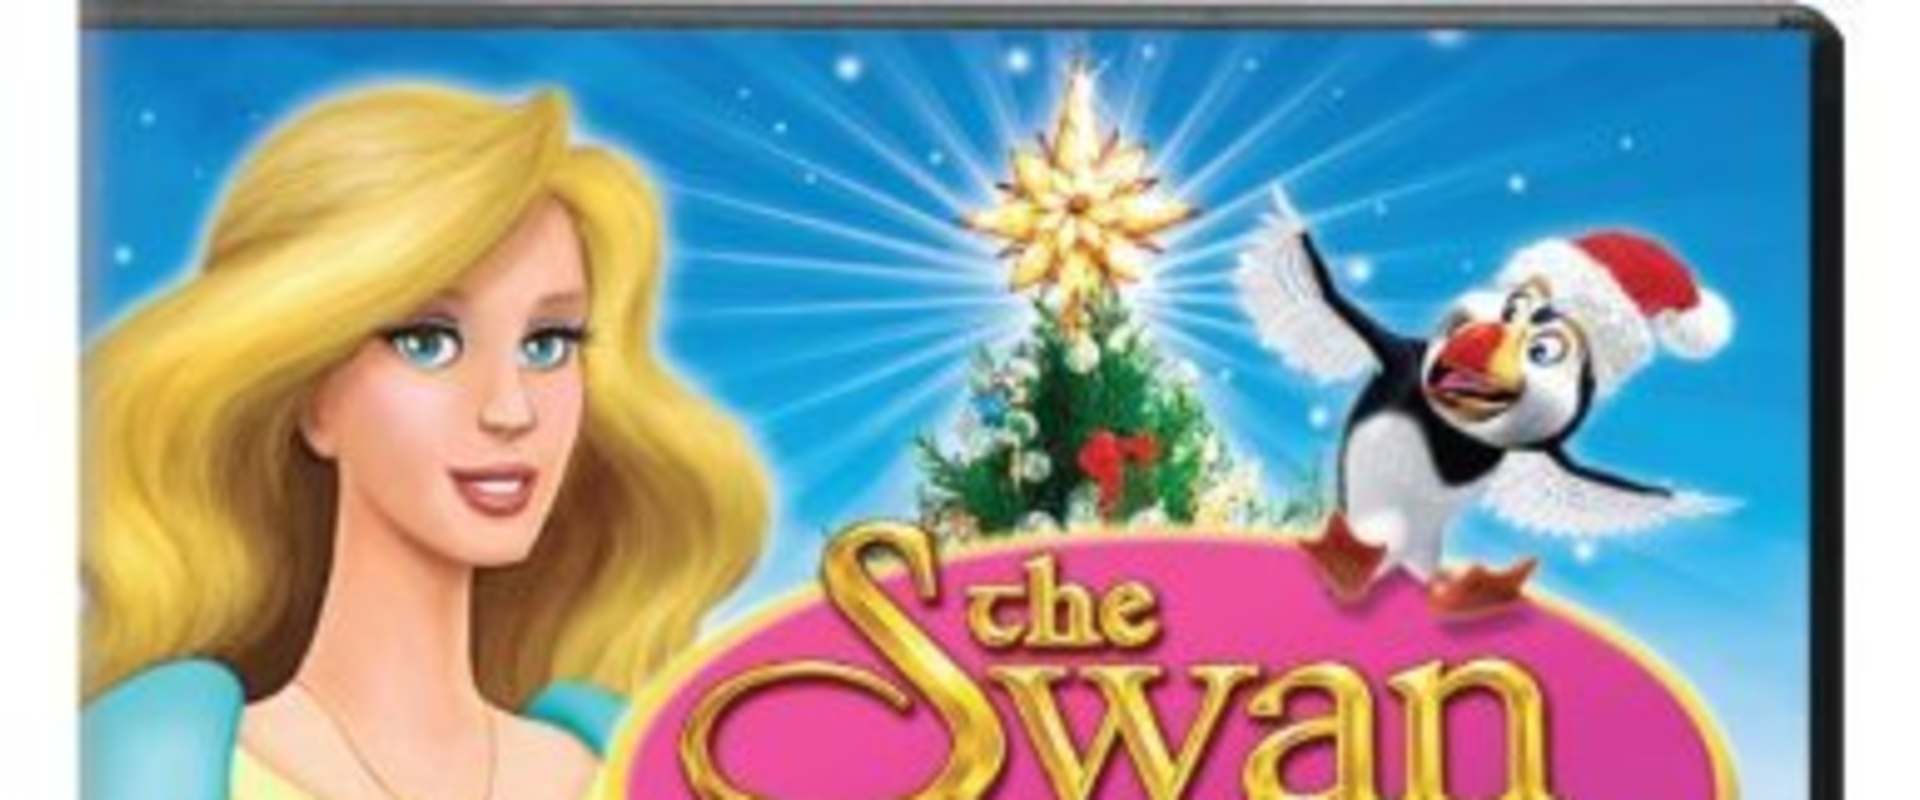 The Swan Princess Christmas background 2